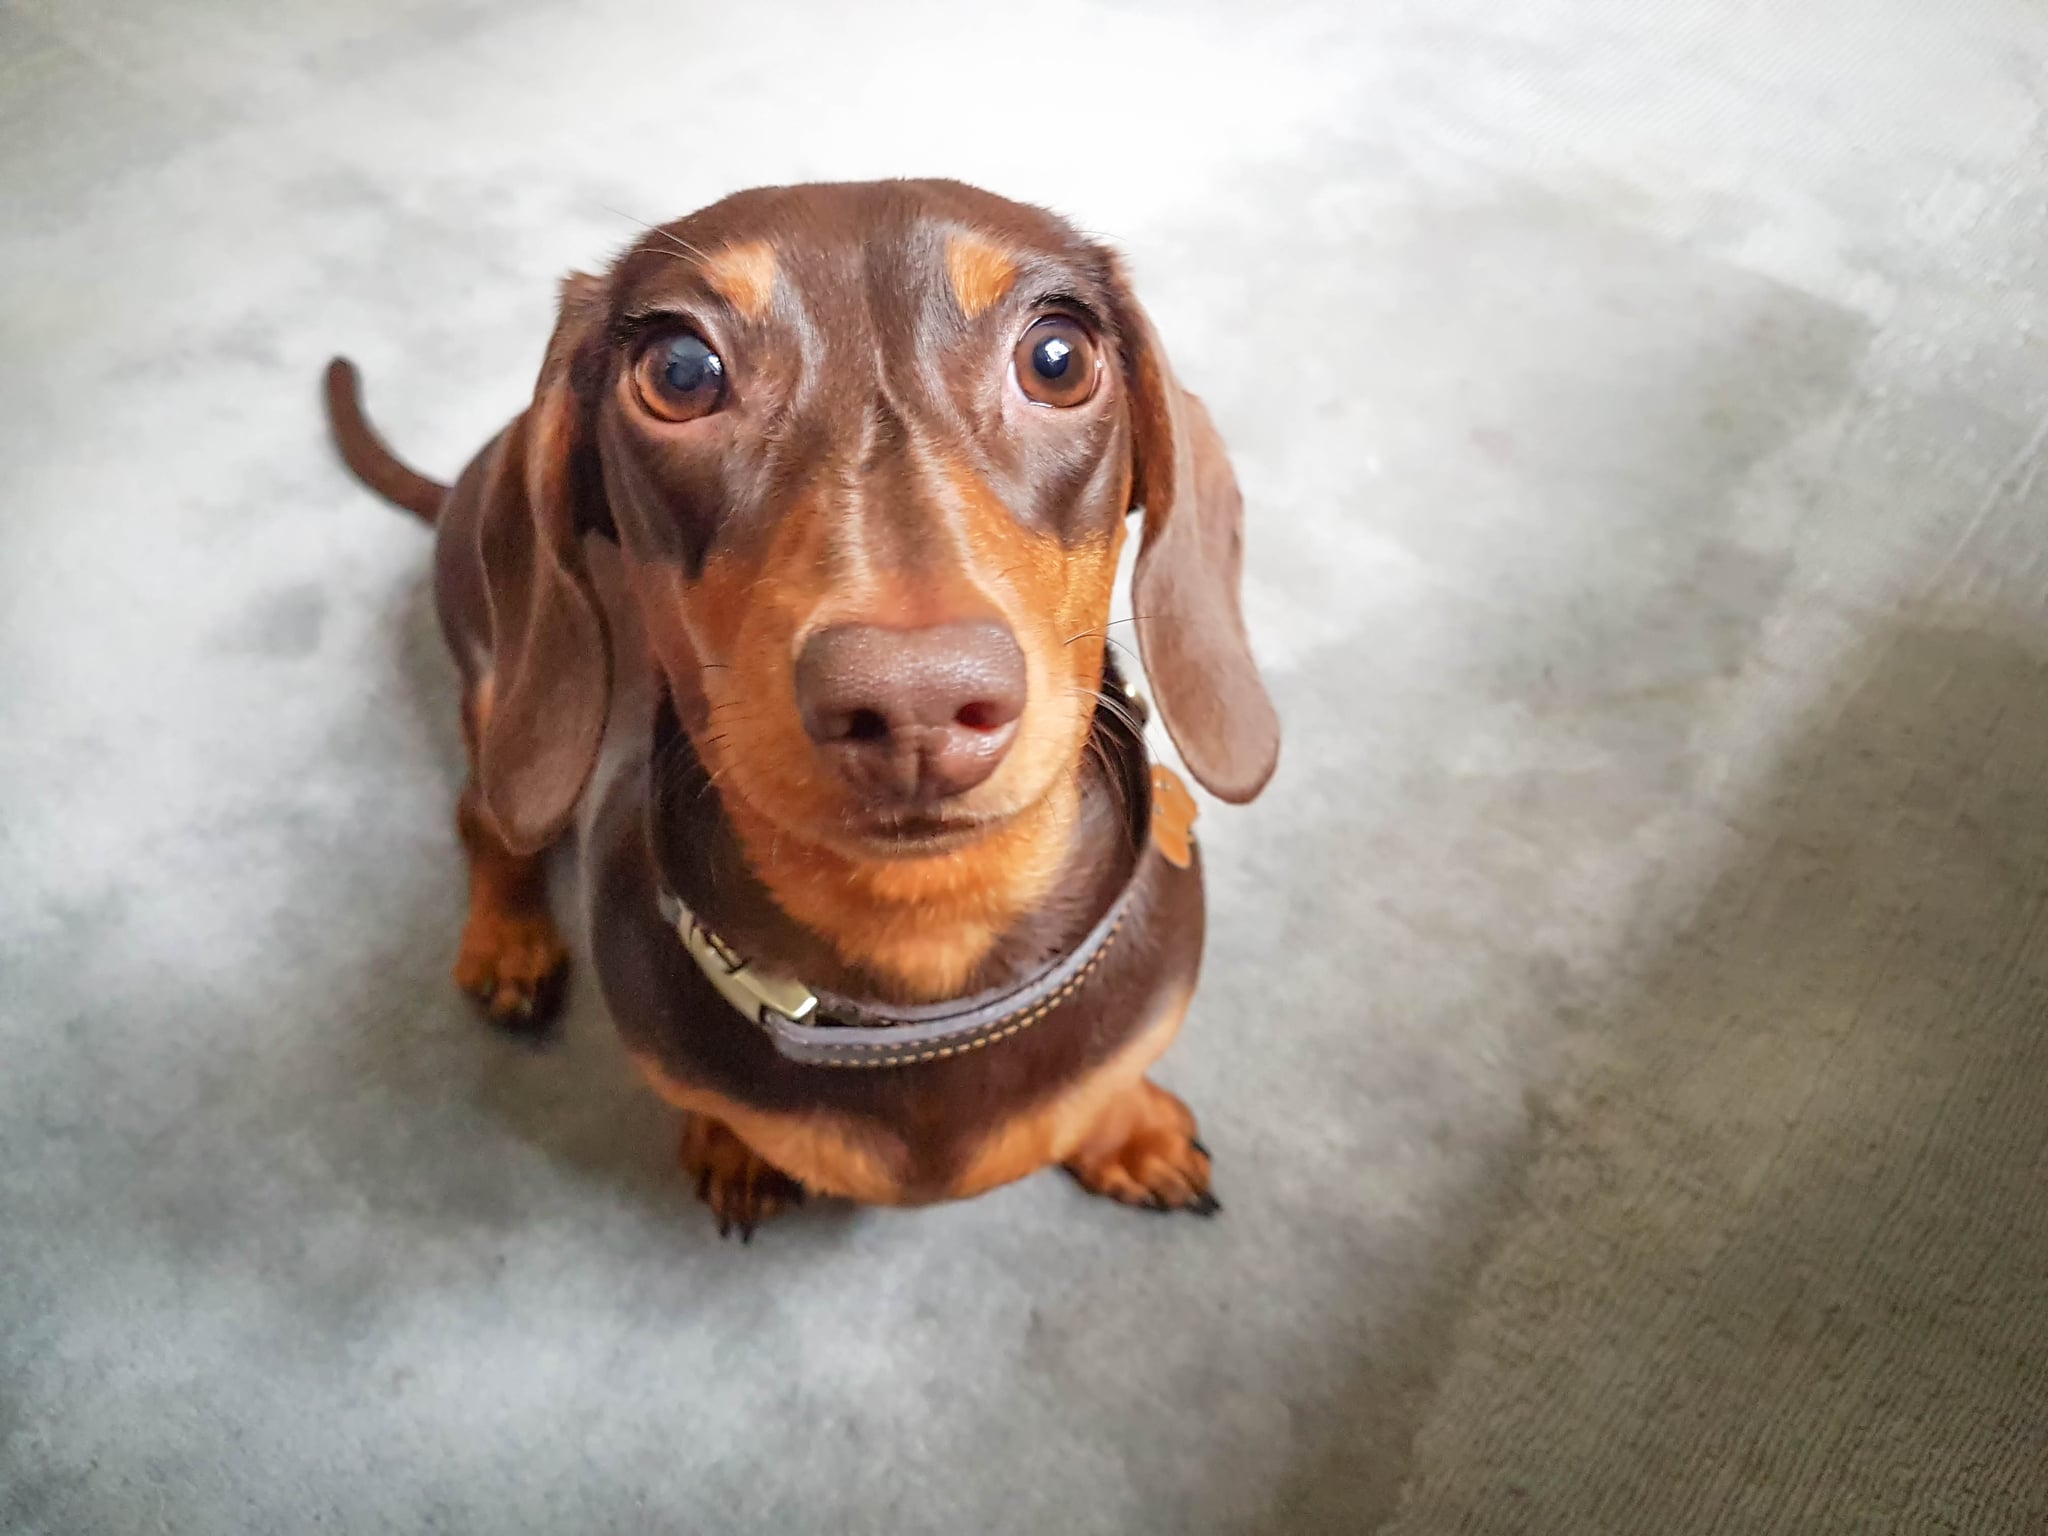 Cutest Dachshund Photos | POPSUGAR Pets